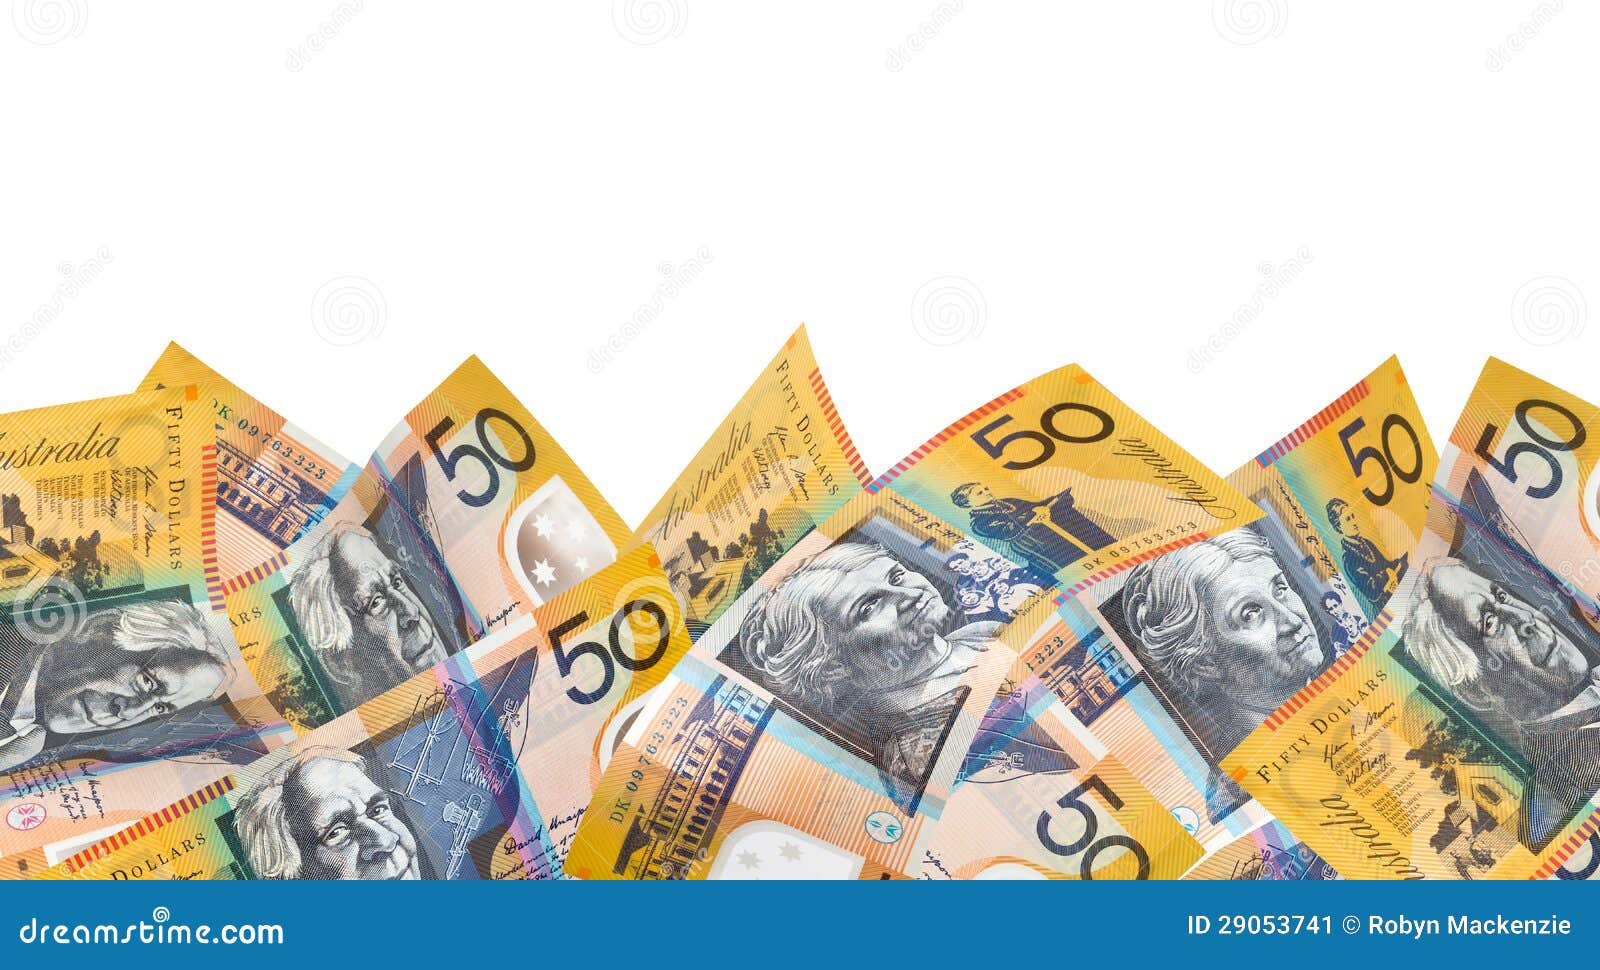 free clipart australian money - photo #6